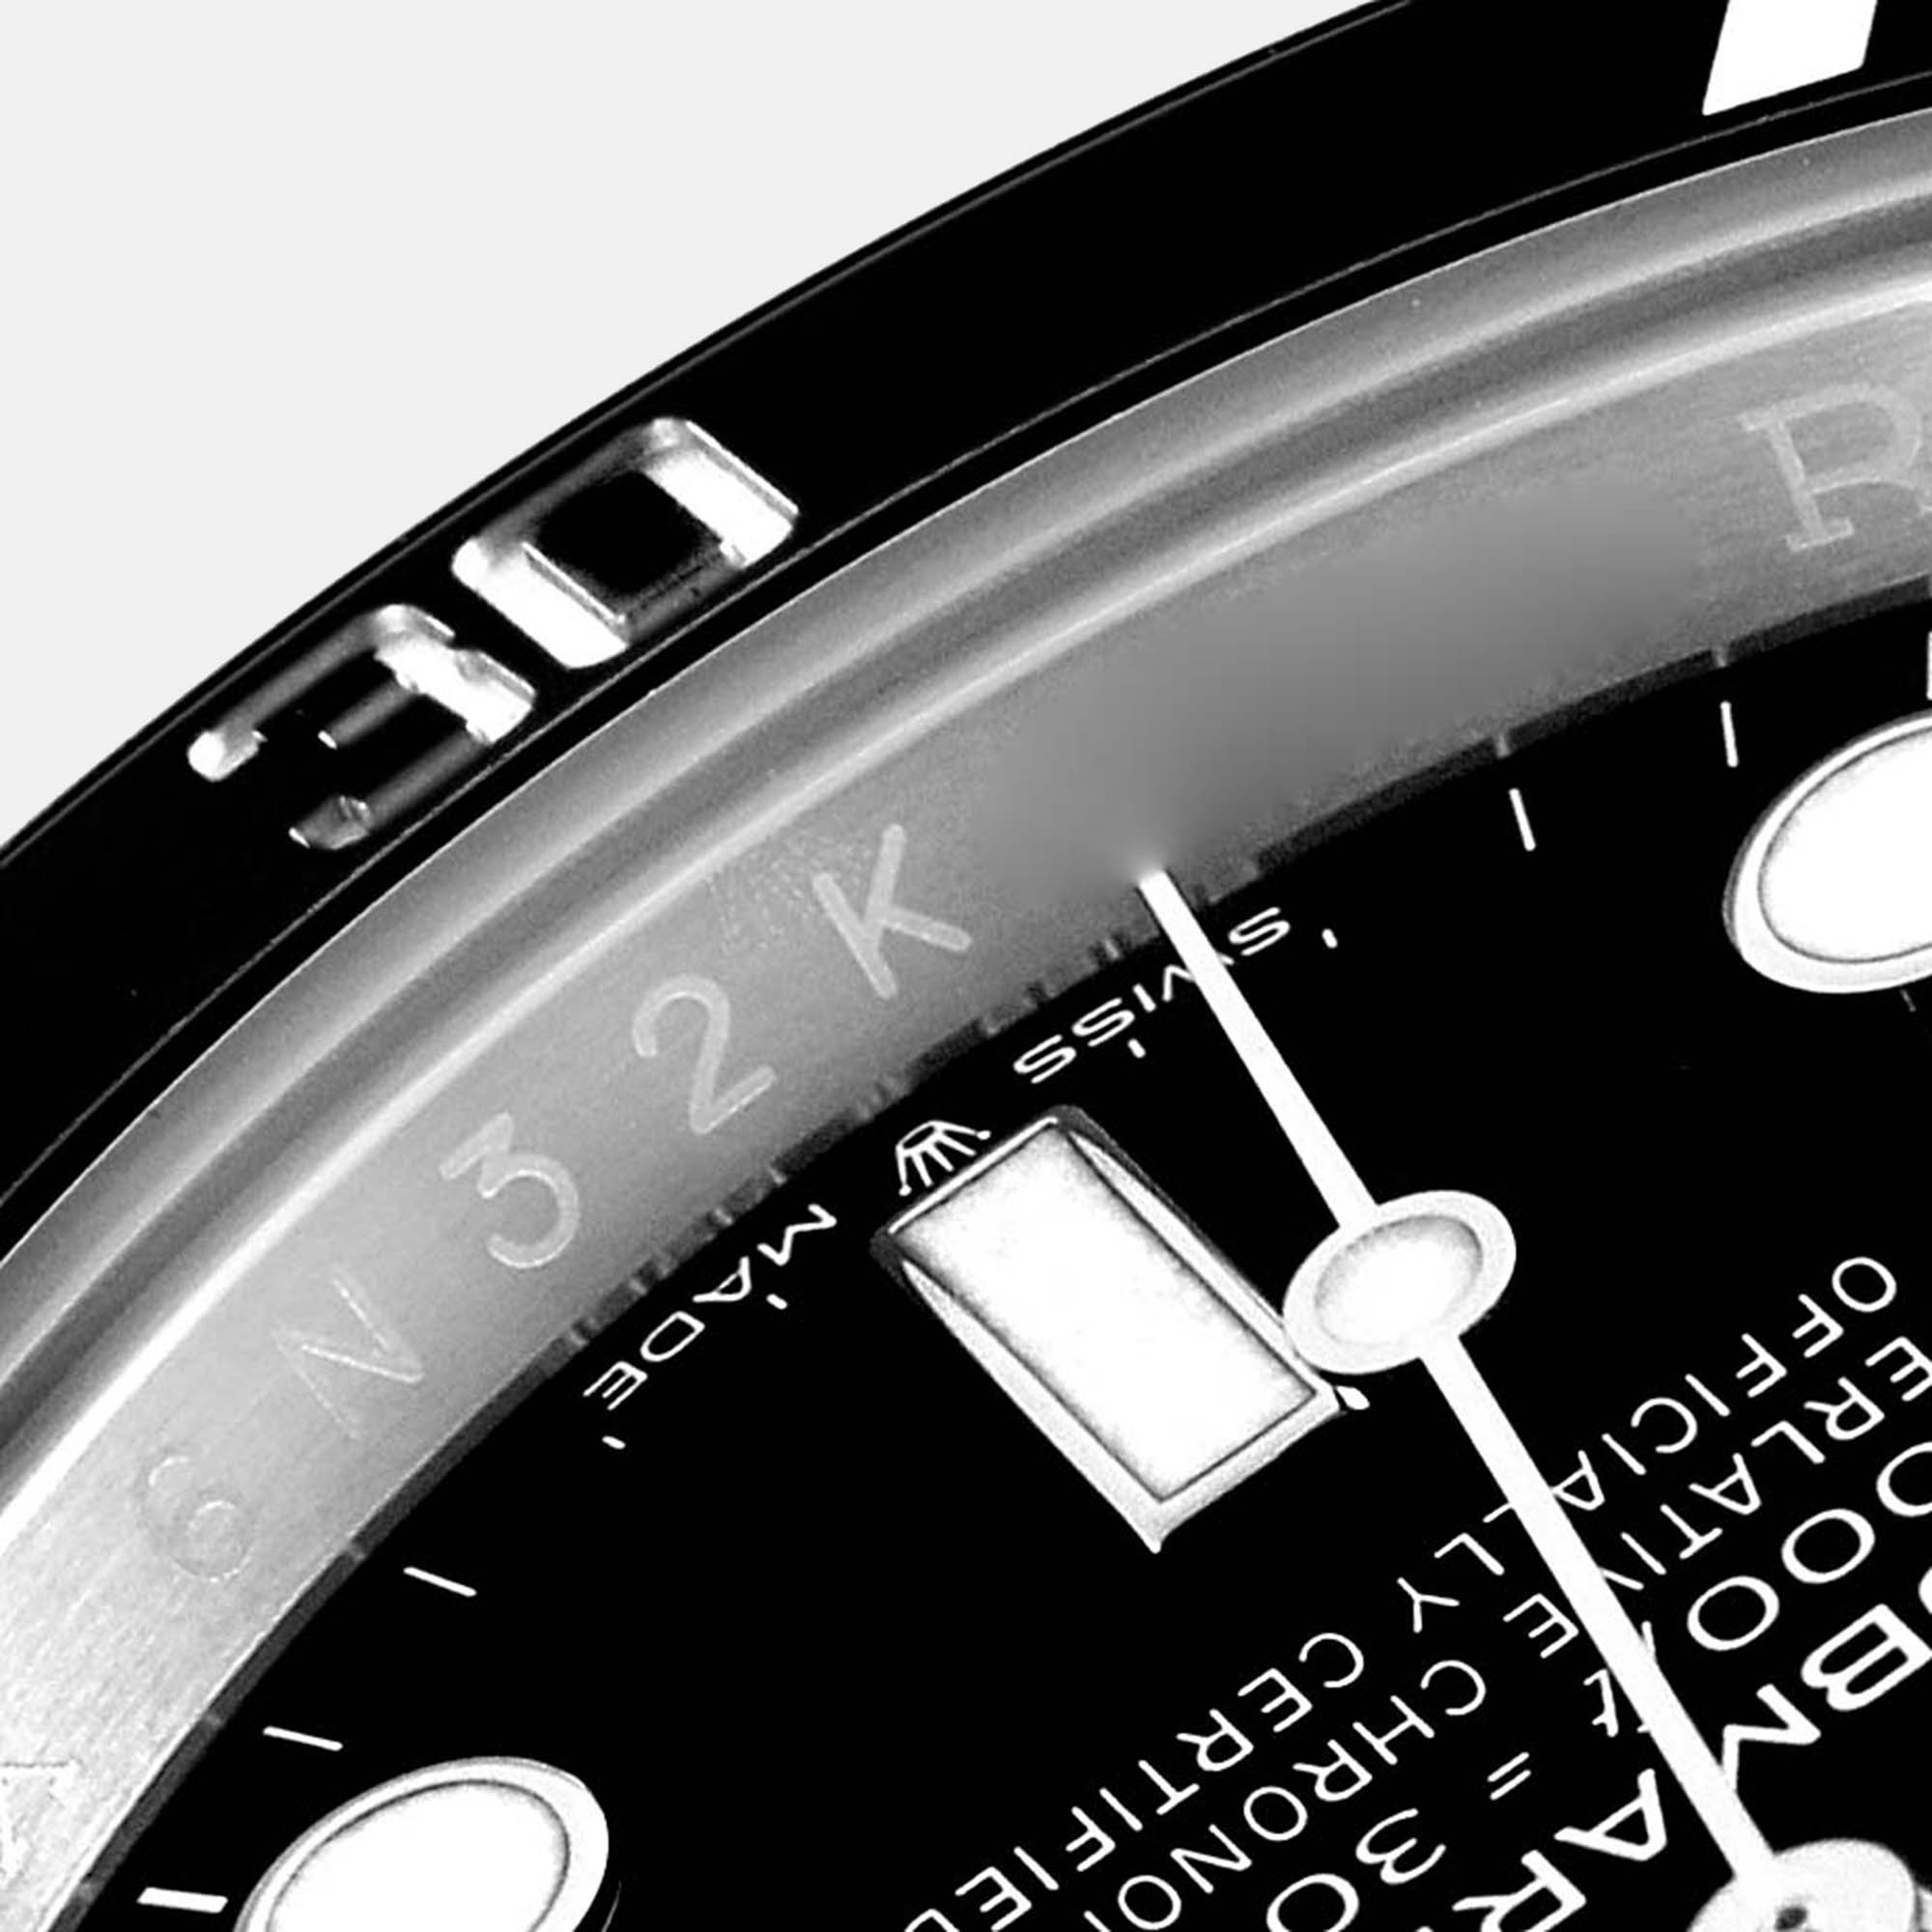 Rolex Submariner Black Dial Ceramic Bezel Steel Mens Watch 126610